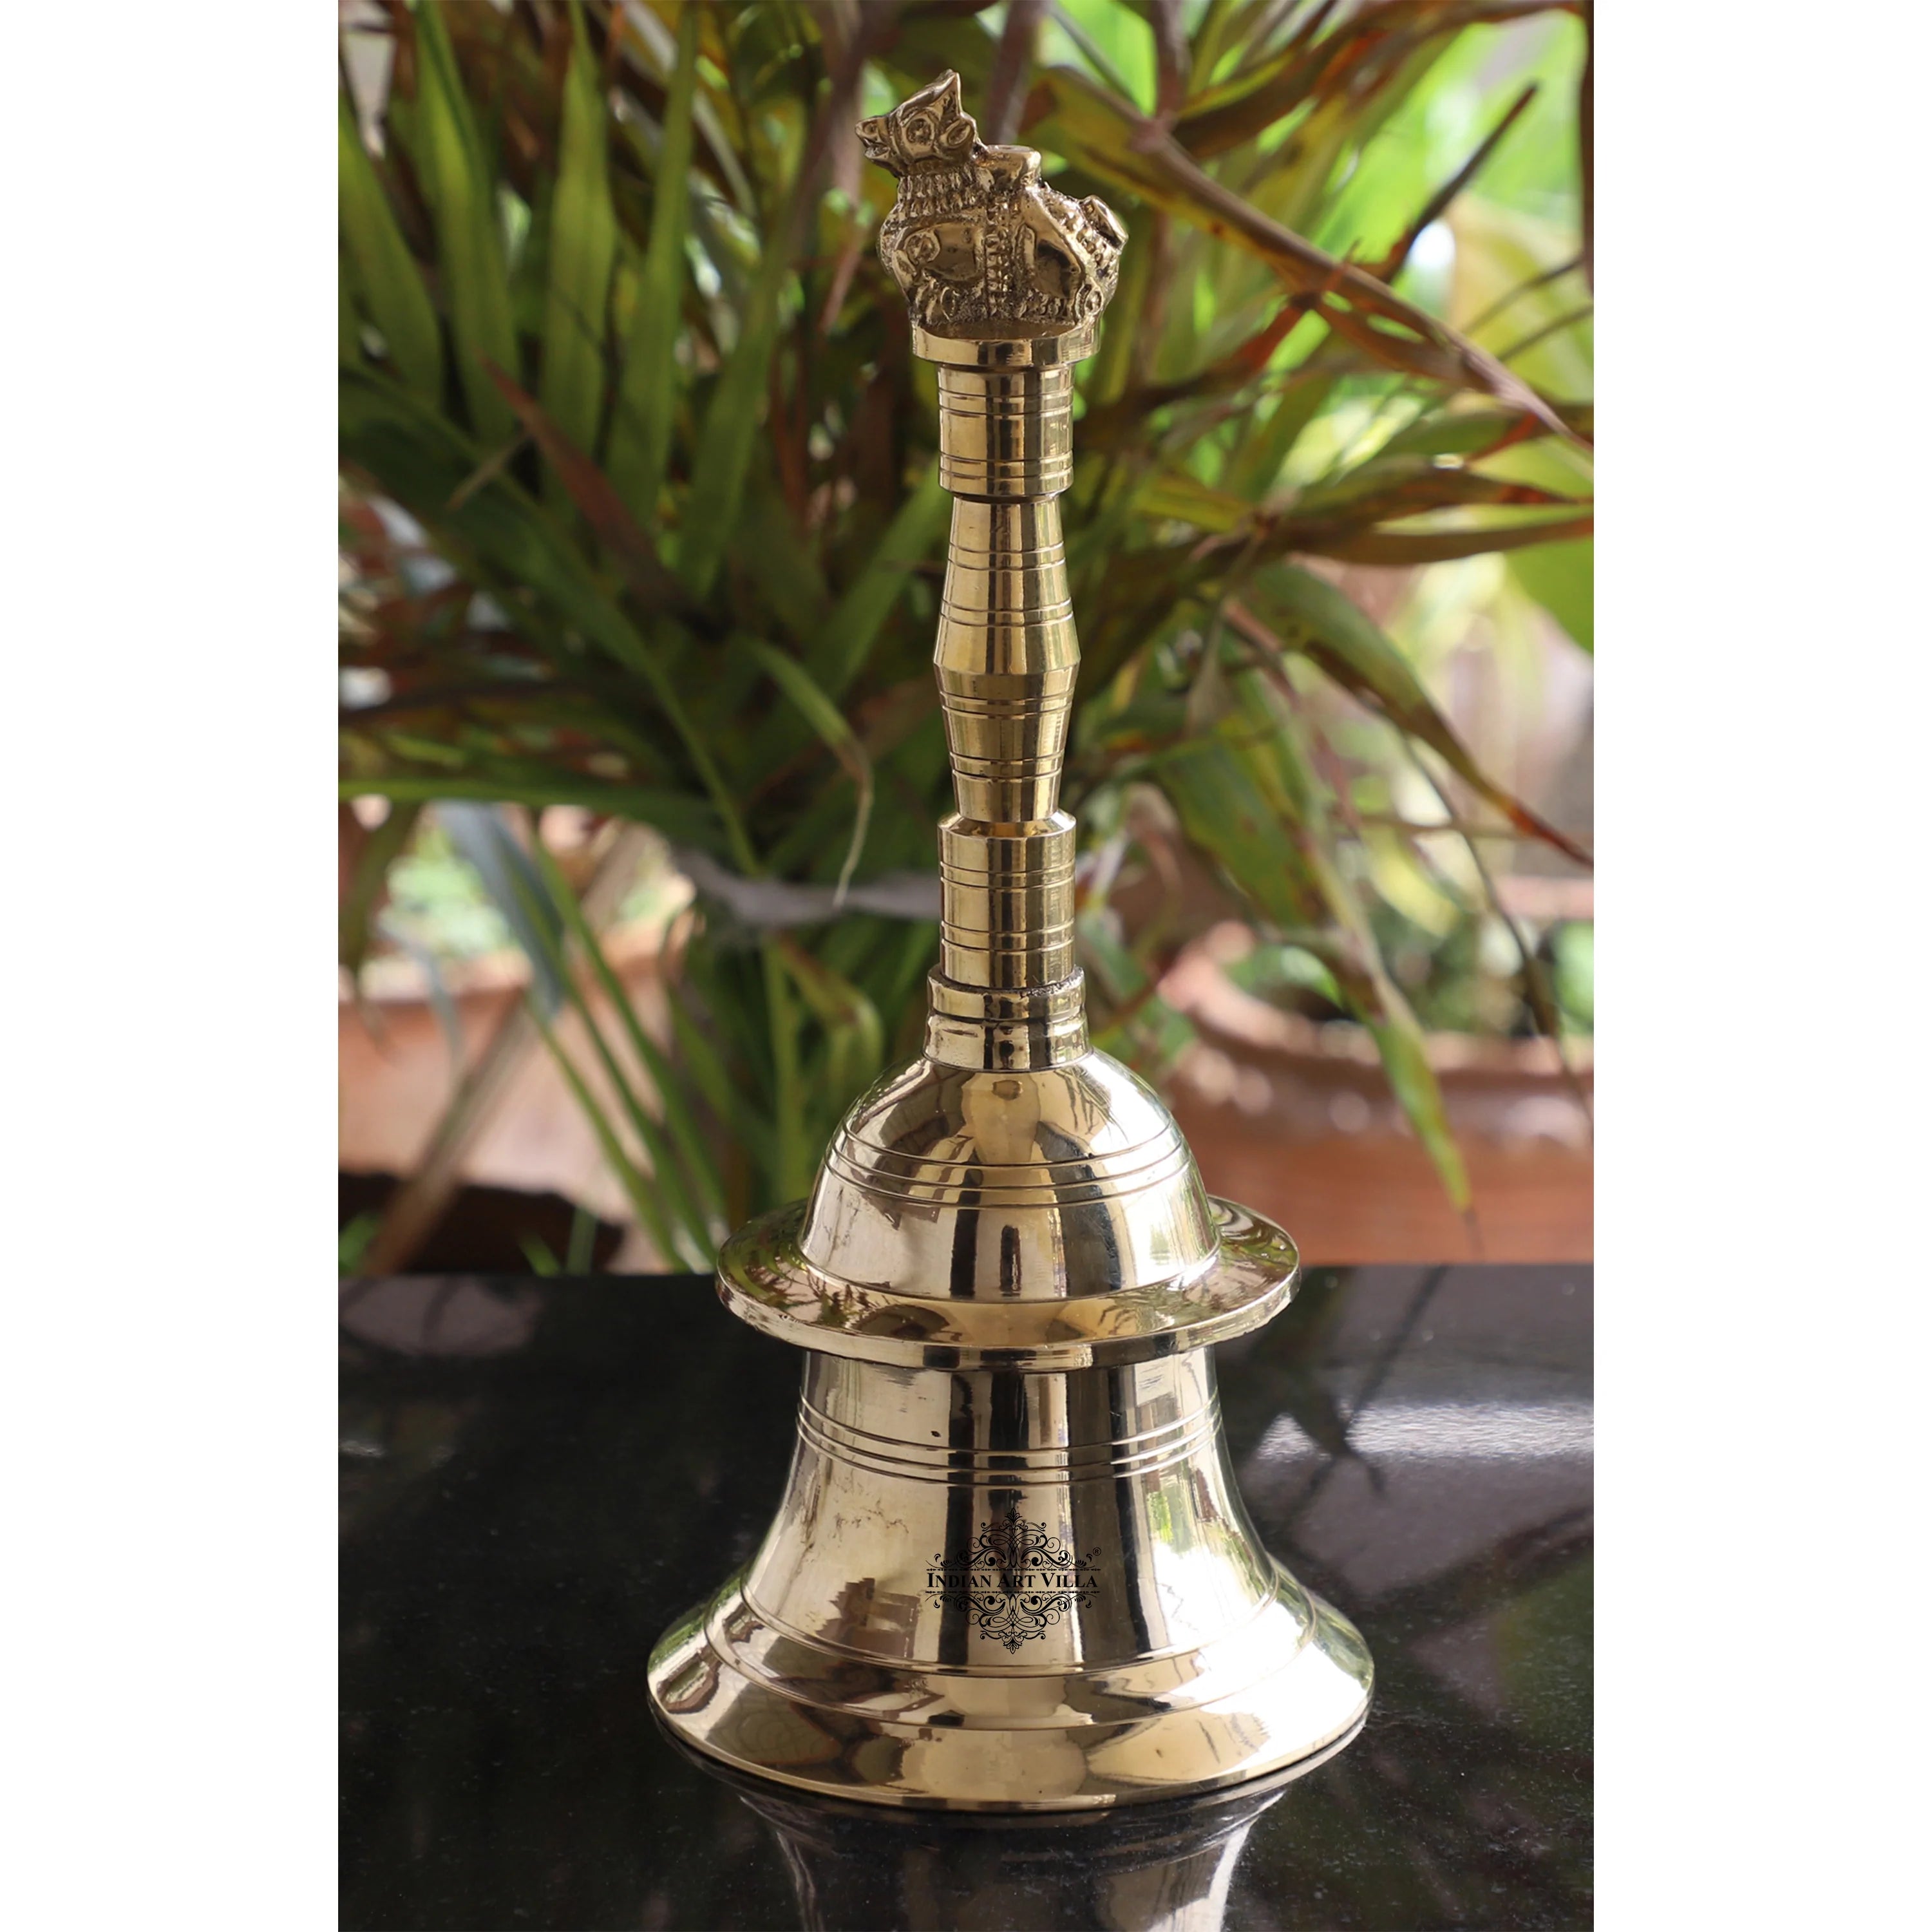 Ghanti (bell), Indian